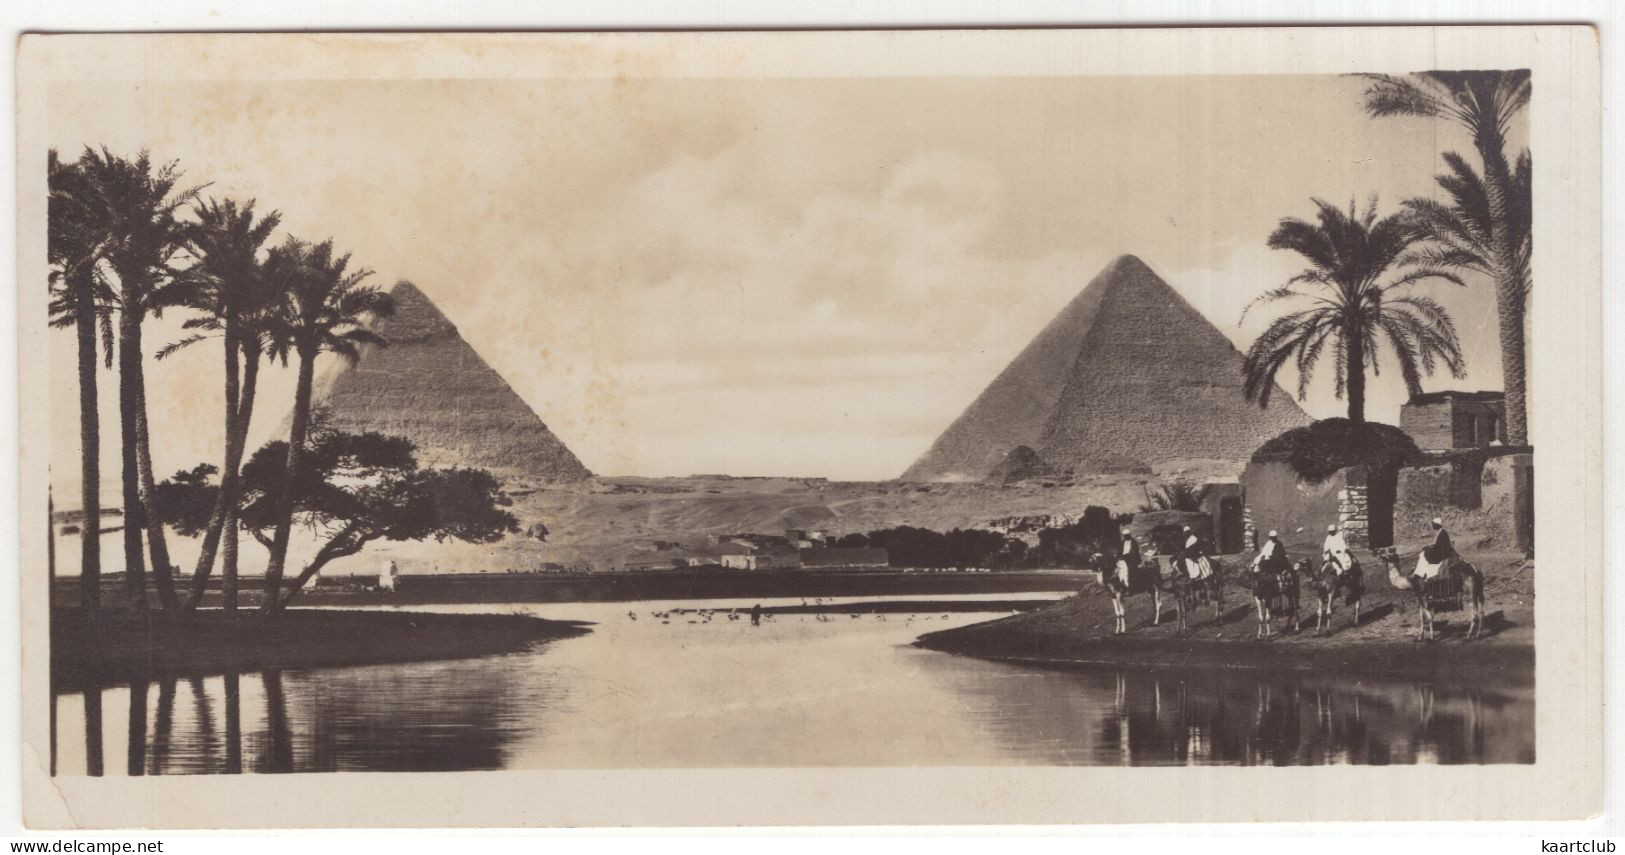 Cairo. Innondation At The Pyramids - (Egypt) - No. 3 - Zogolopoulo Frères, Cairo - (Size: 15 Cm X 7.5 Cm) - Caïro